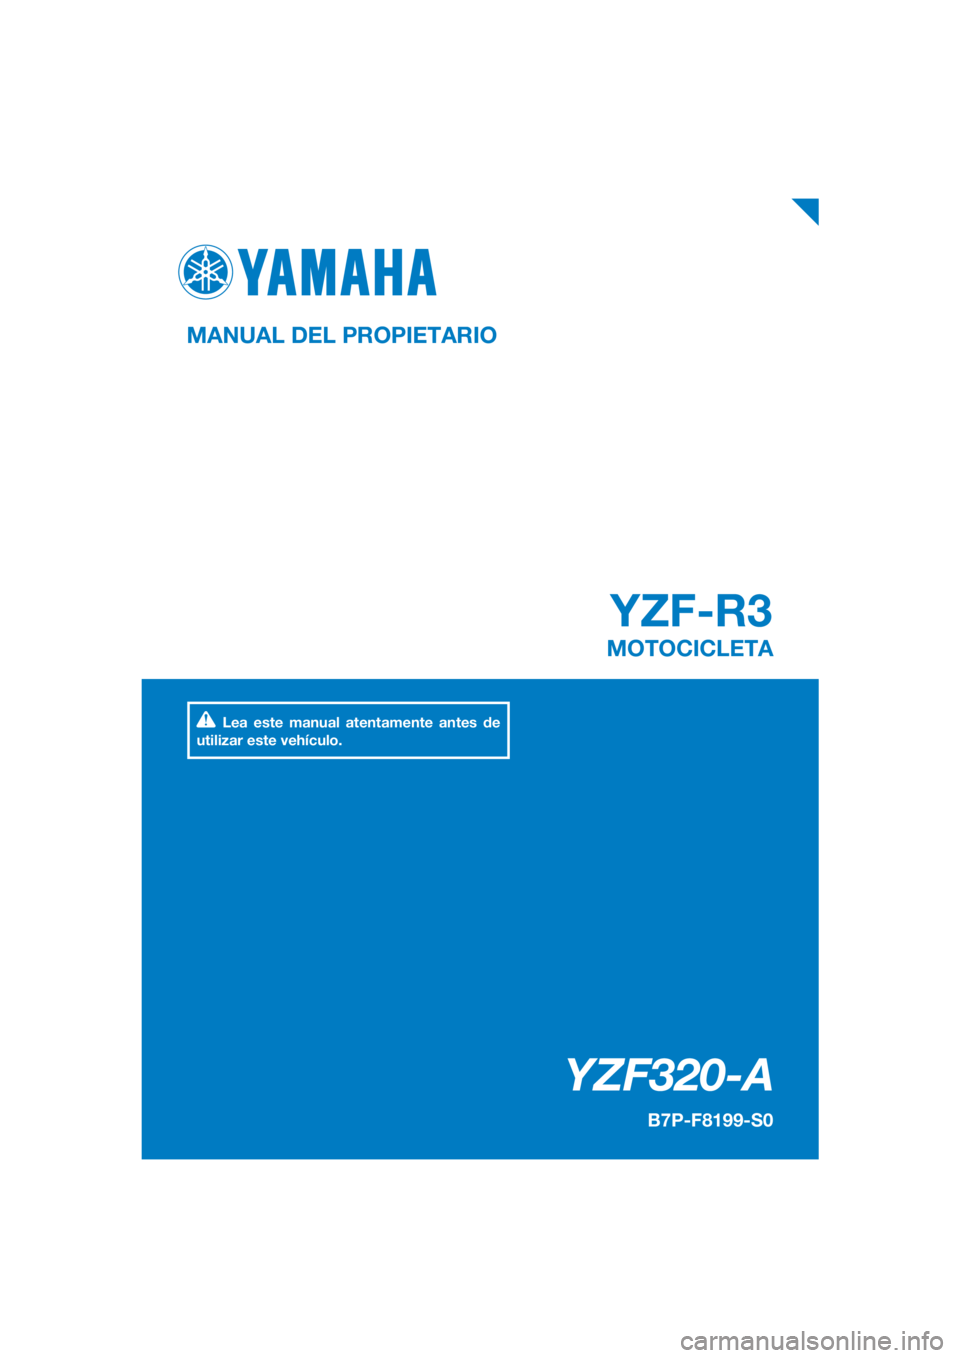 YAMAHA YZF-R3 2019  Betriebsanleitungen (in German) DIC183
YZF-R3
YZF320-A
MANUAL DEL PROPIETARIO
B7P-F8199-S0
MOTOCICLETA
Lea este manual atentamente antes de 
utilizar este vehículo.
[Spanish  (S)] 